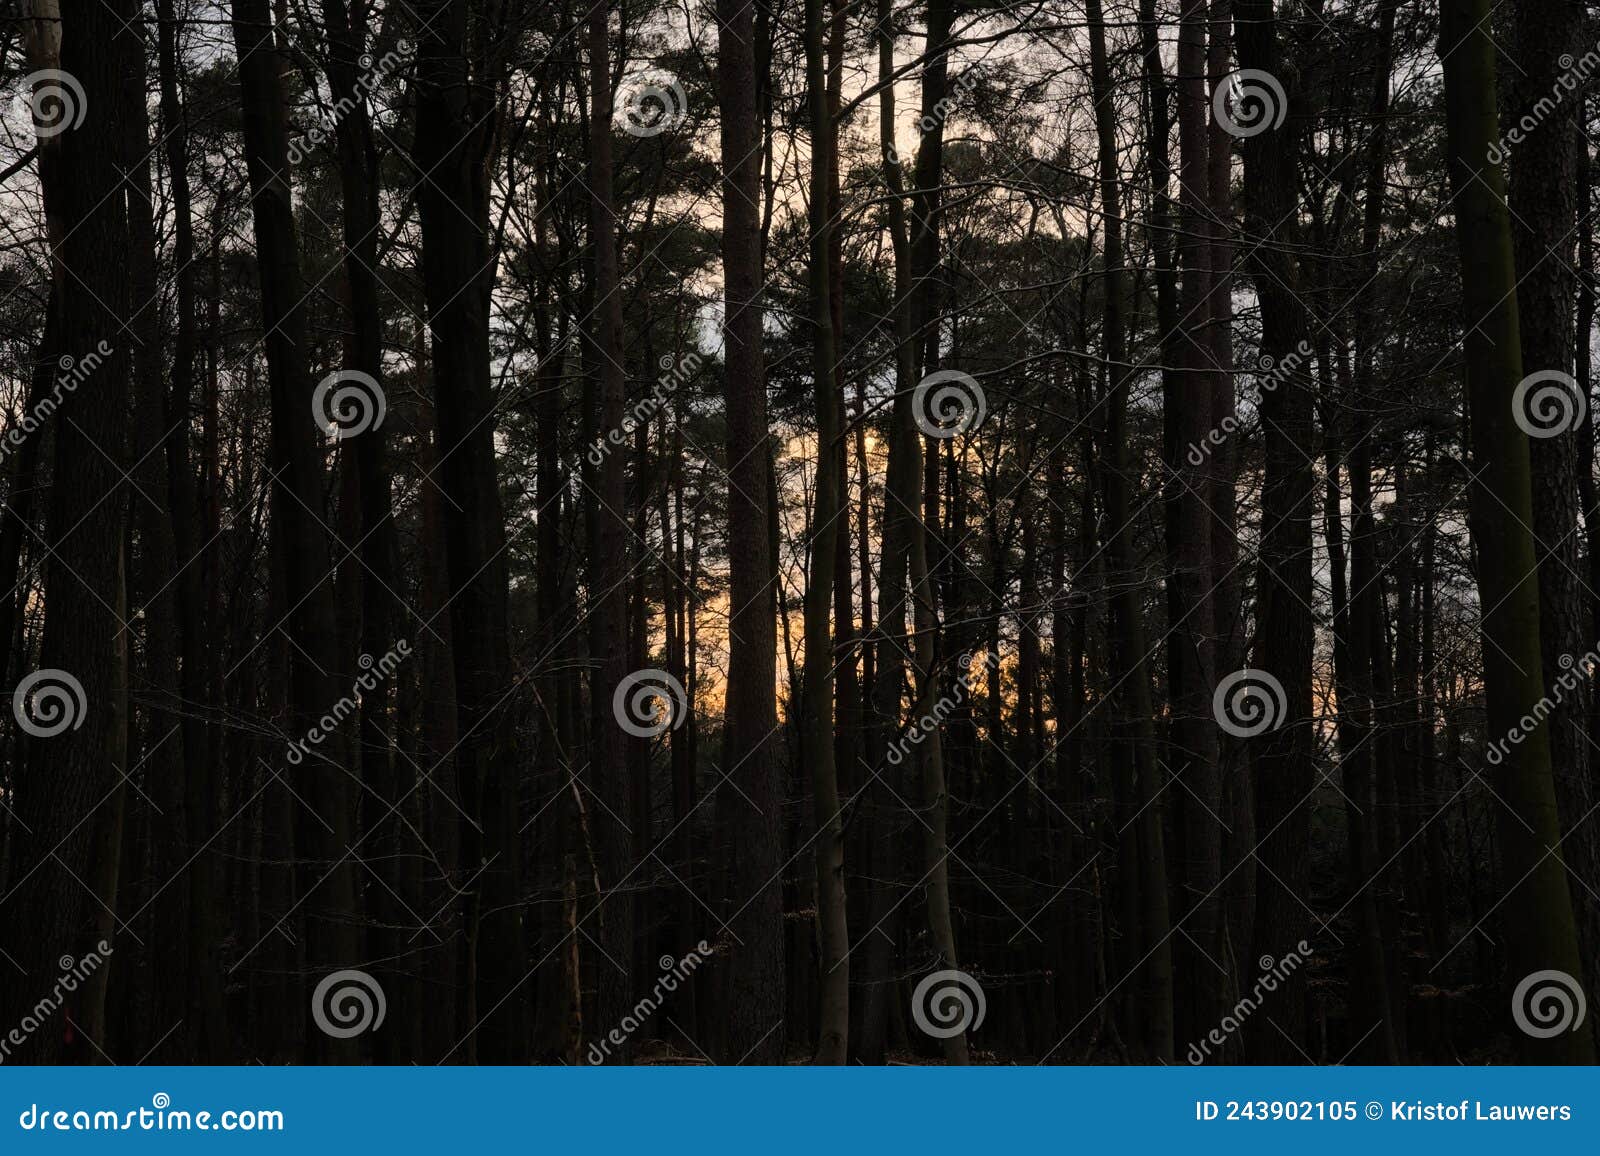 dark tree silouetts with colorful sunset sky peeking thorugh